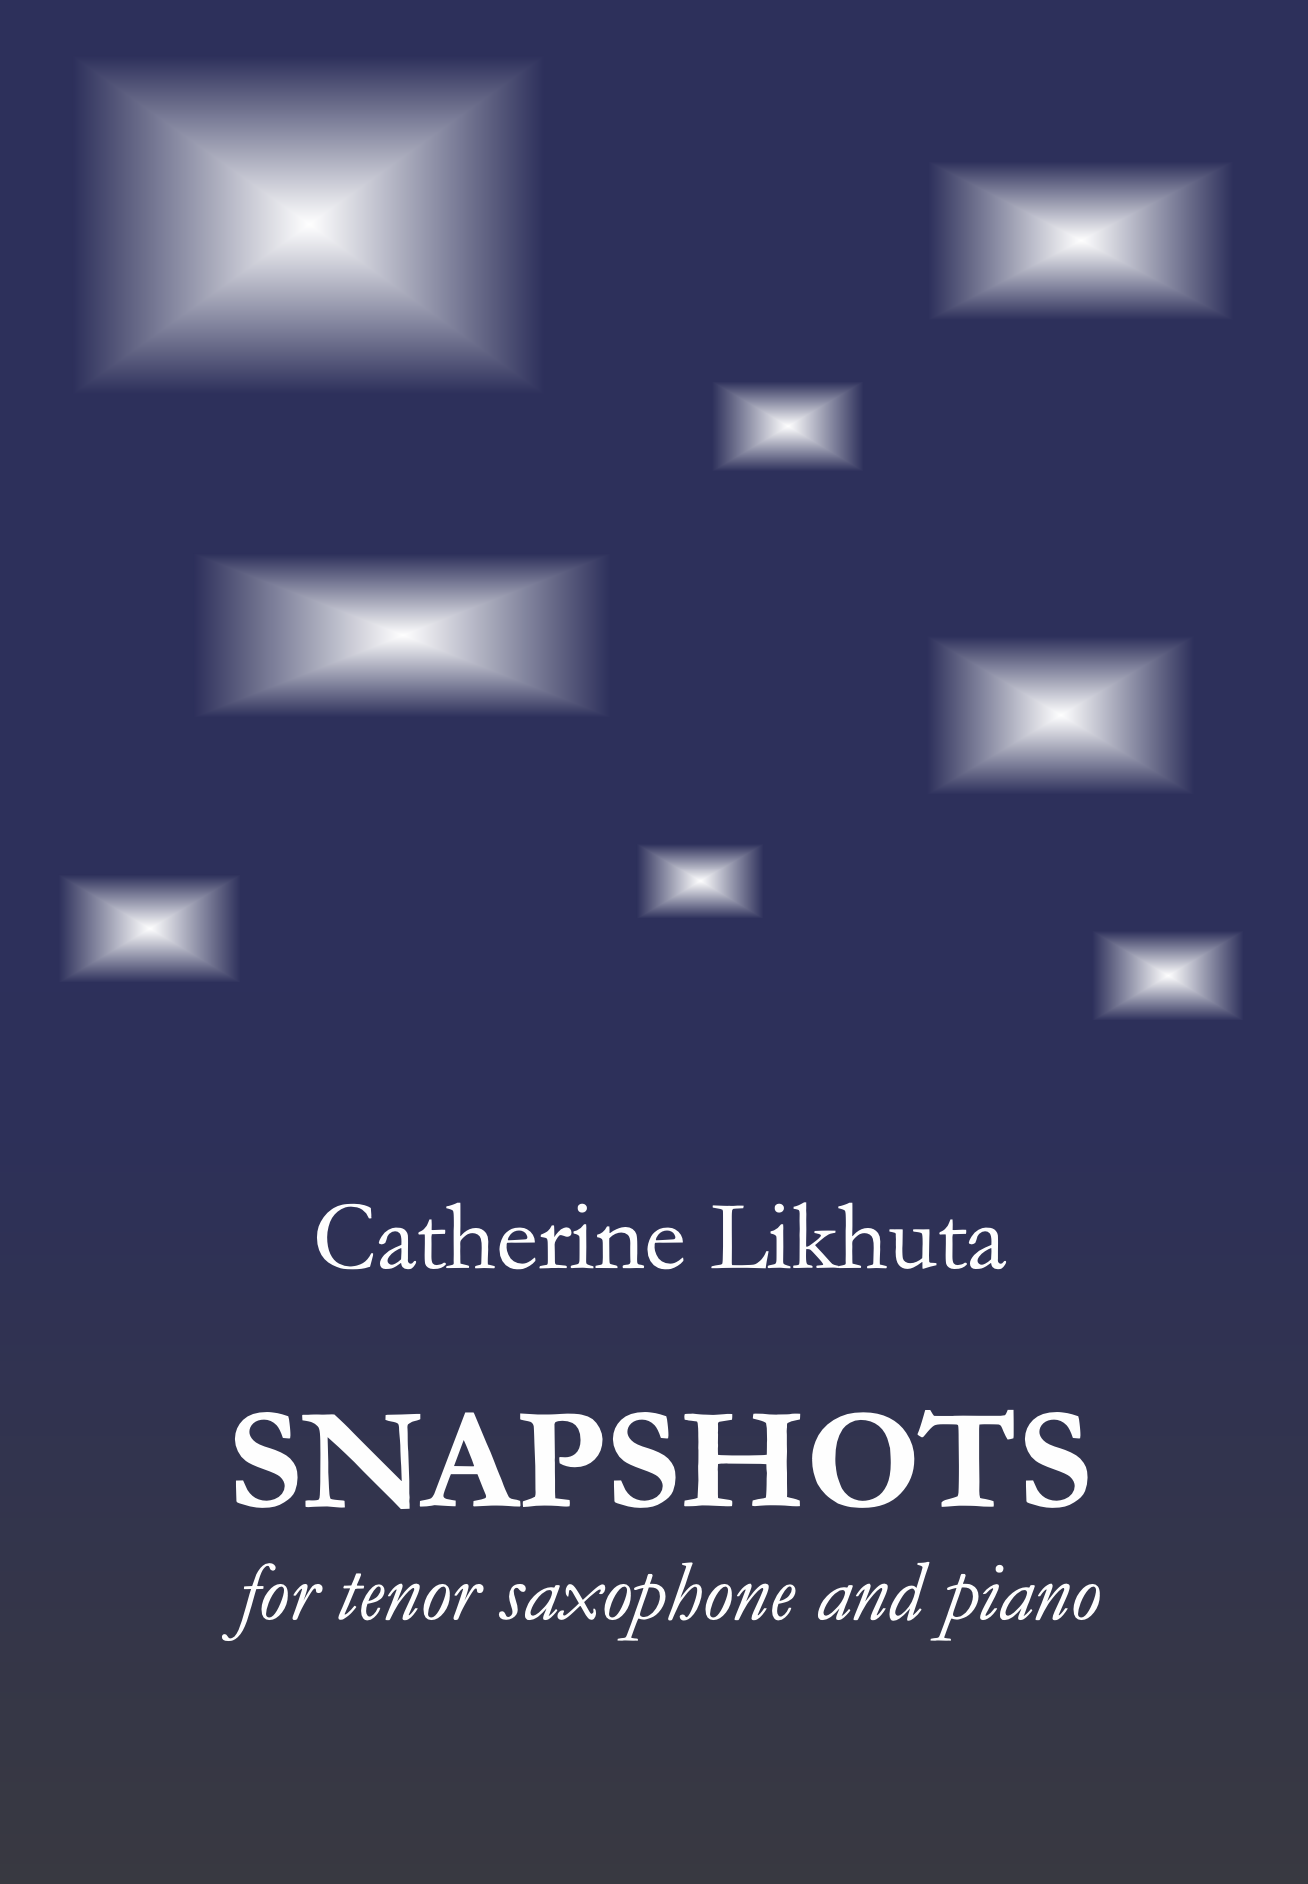 Snapshots (Likhuta) by Catherine Likhuta